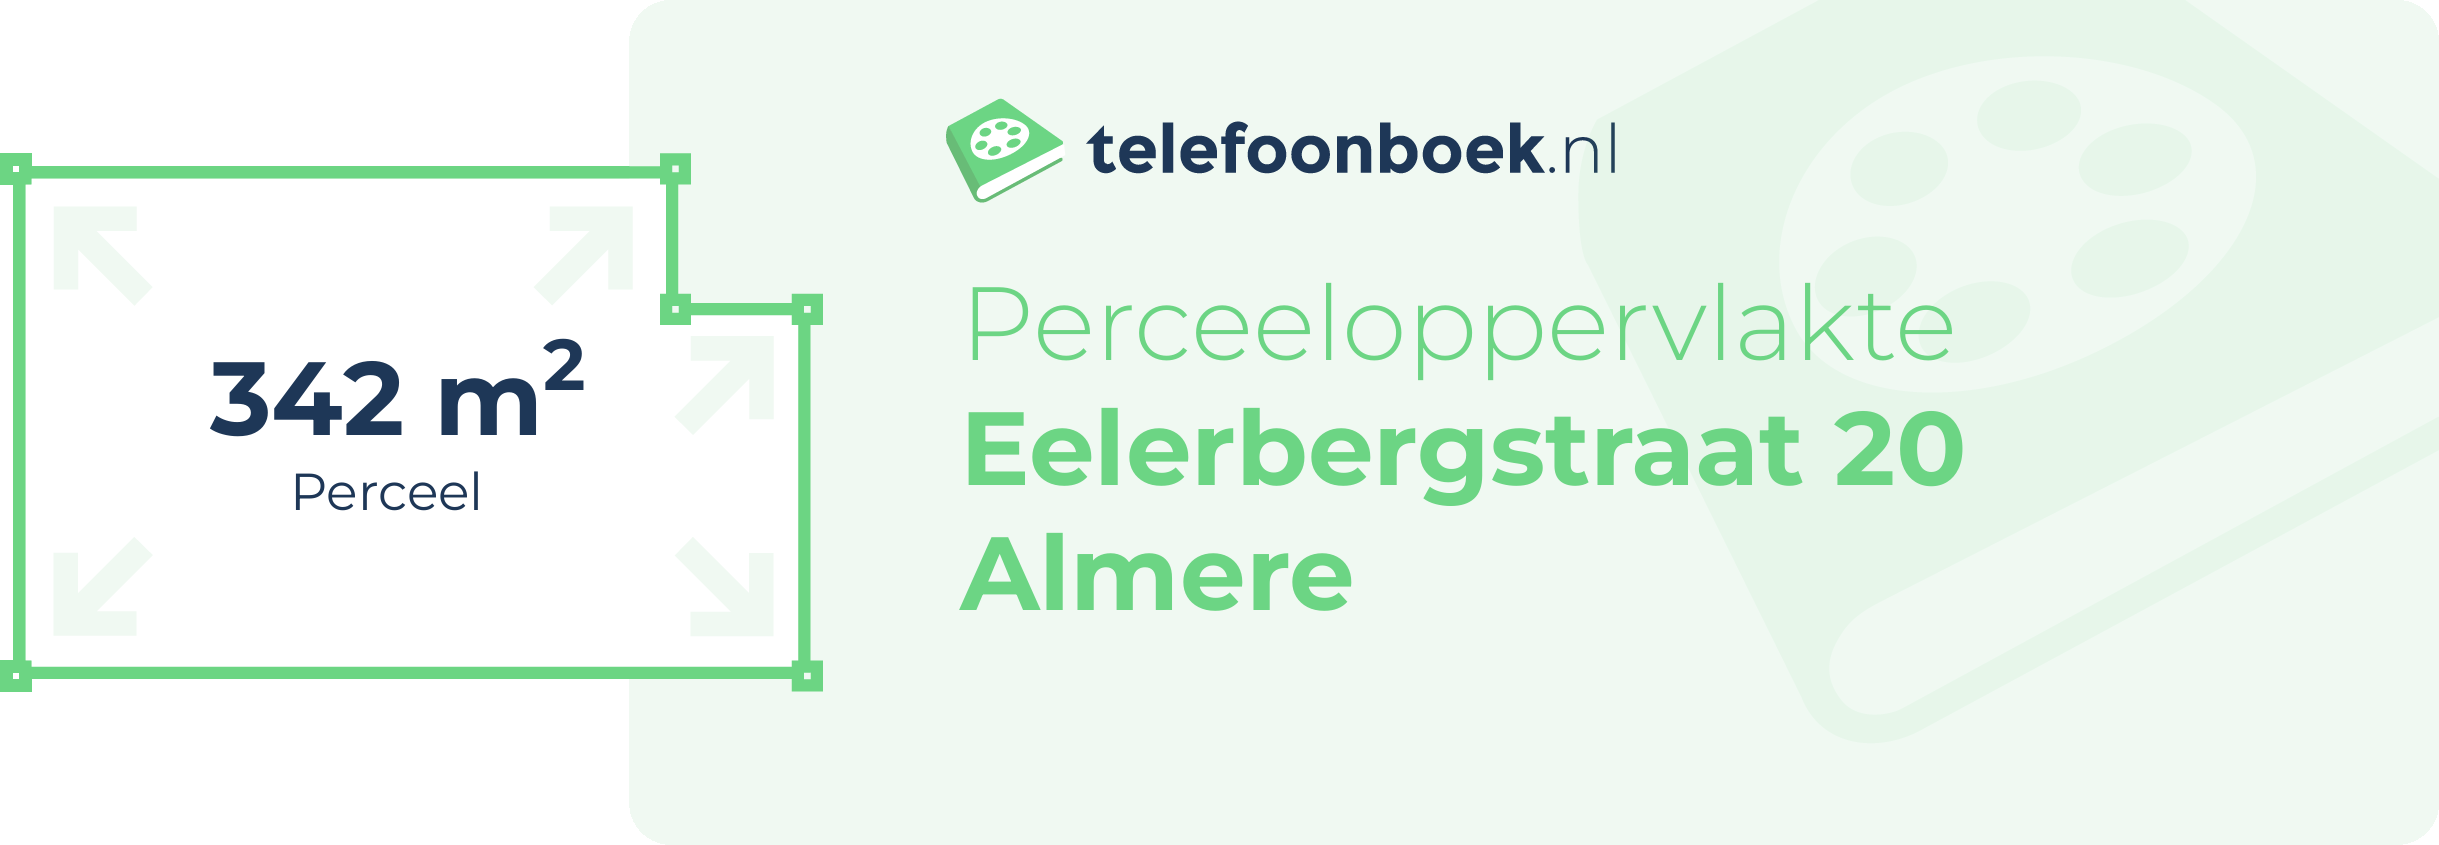 Perceeloppervlakte Eelerbergstraat 20 Almere